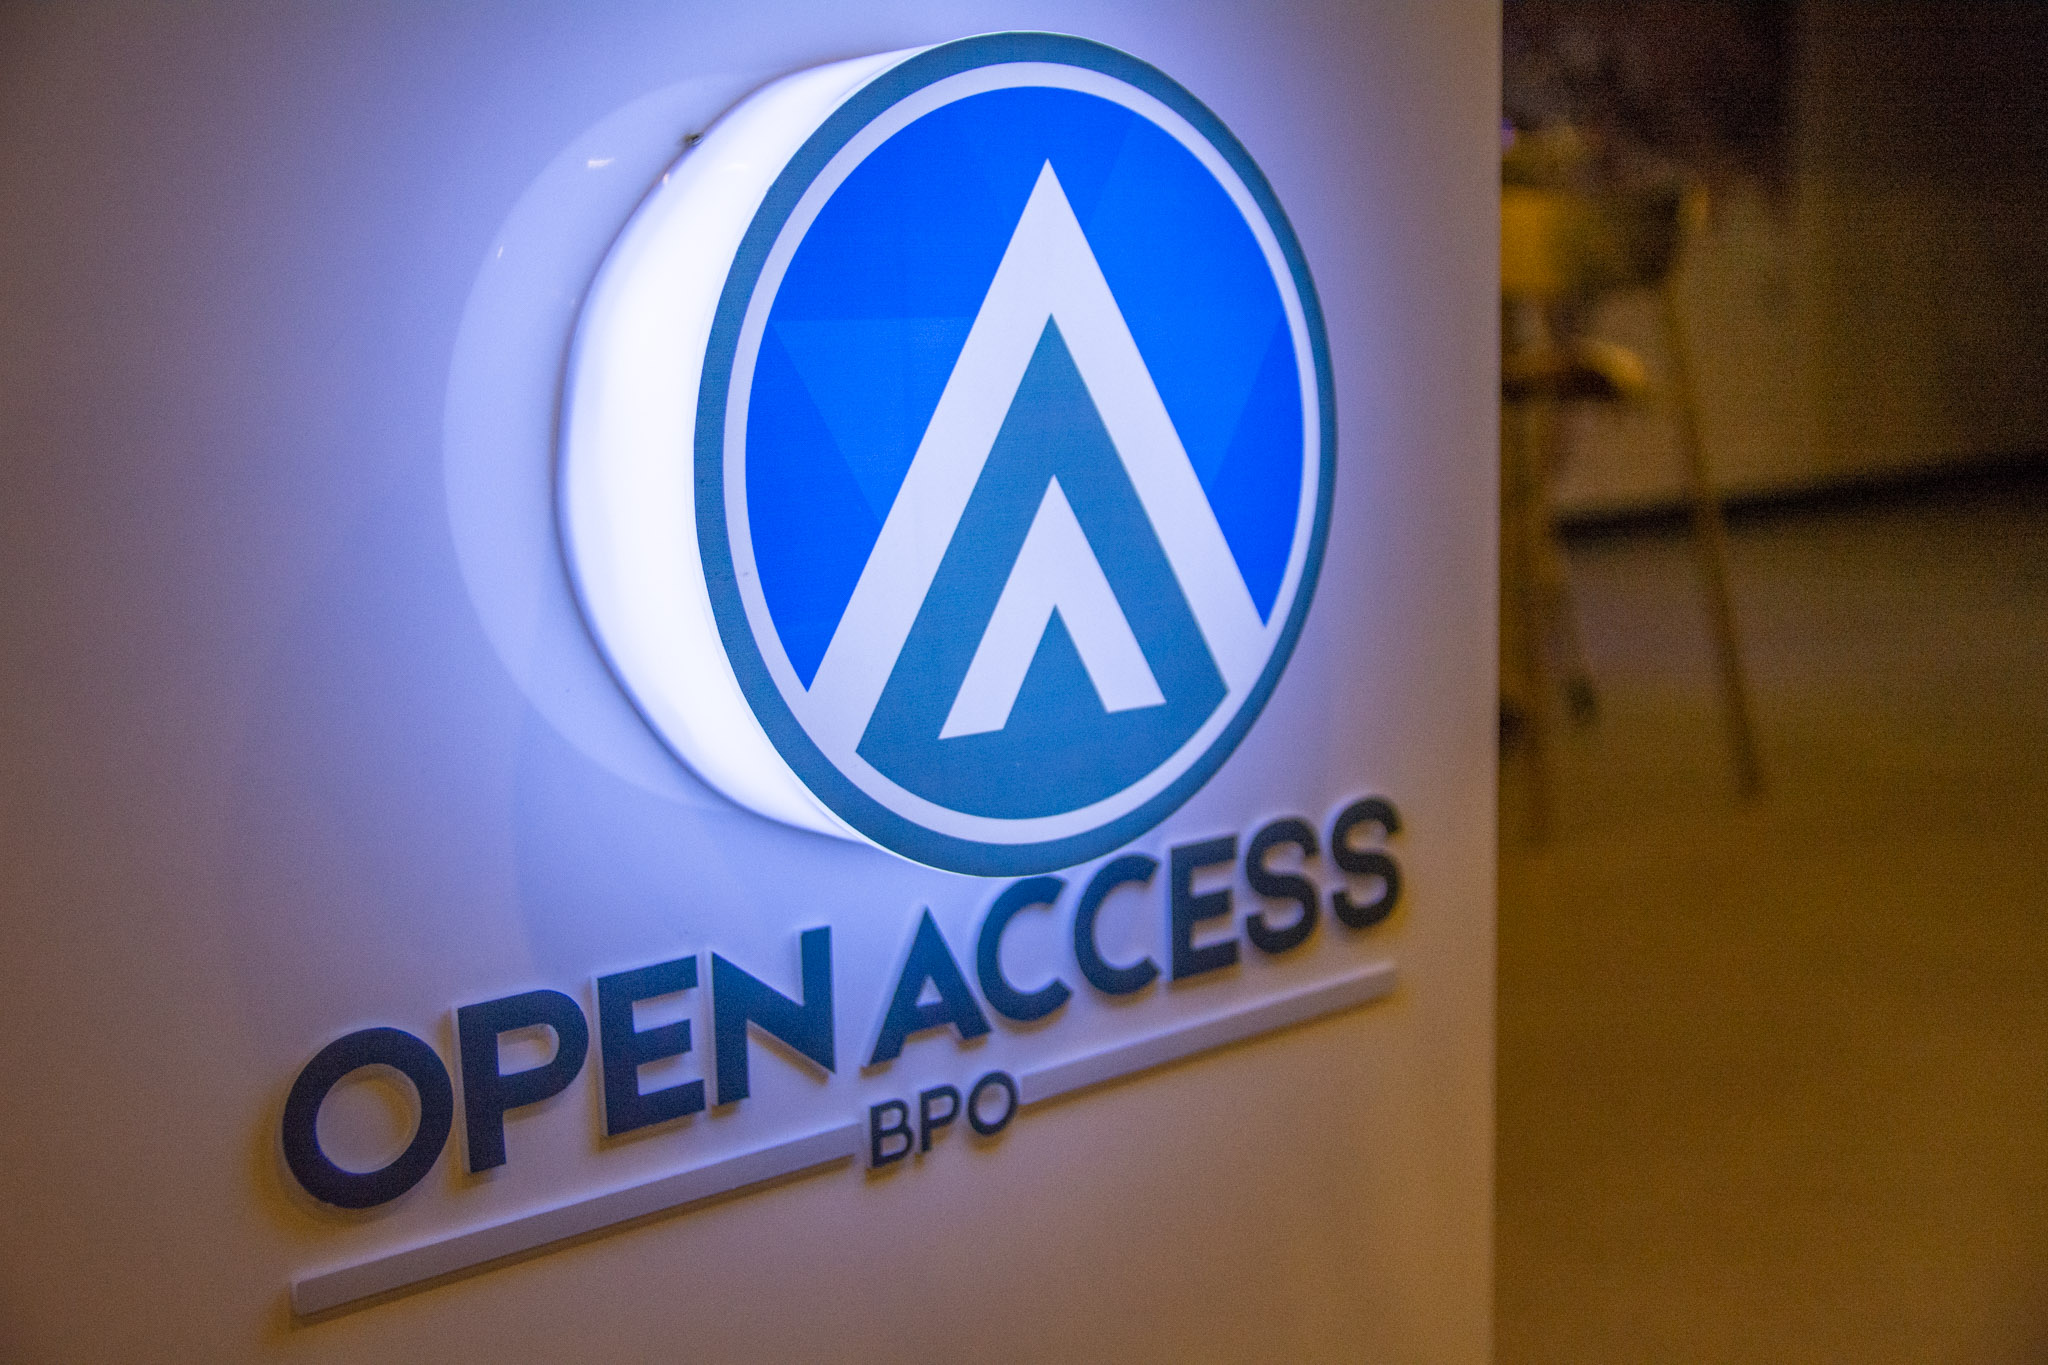 Open Access BPO new logo